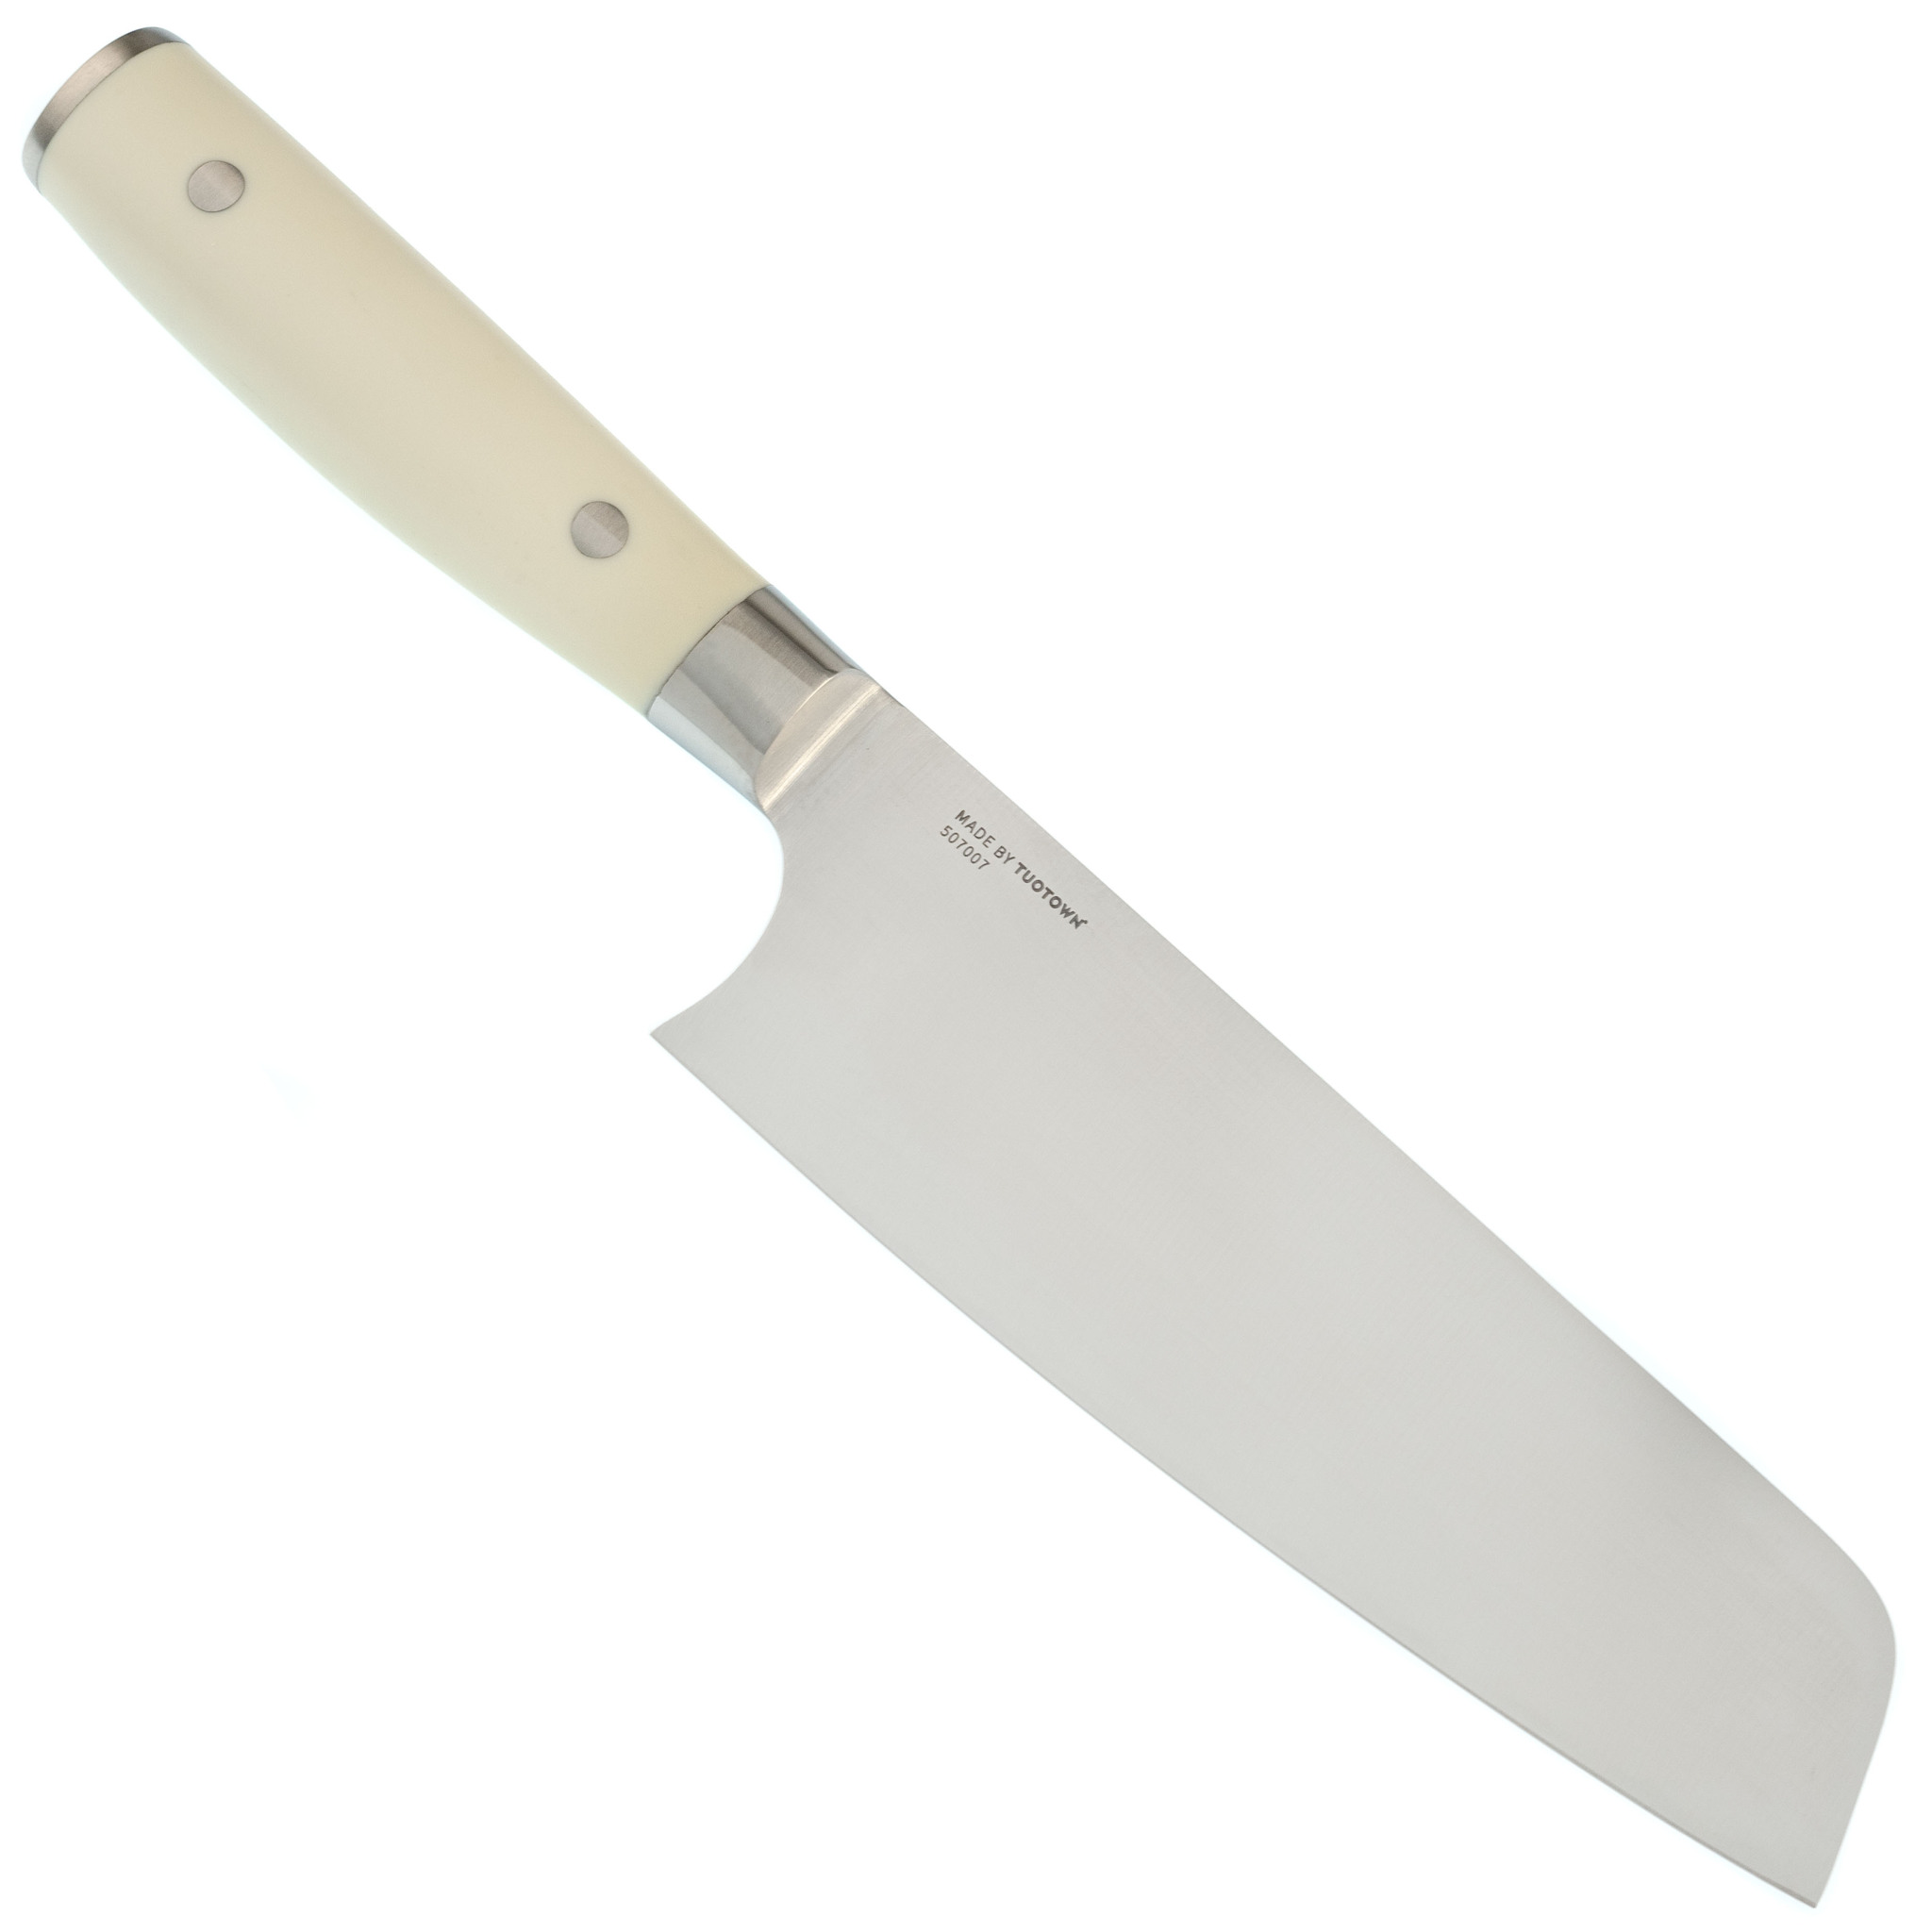 Кухонные ножи tuotown. TUOTOWN / кухонный нож Накири 17.5. TUOTOWN ножи. Нож Накири ручная работа. TUOTOWN ножи отзывы.